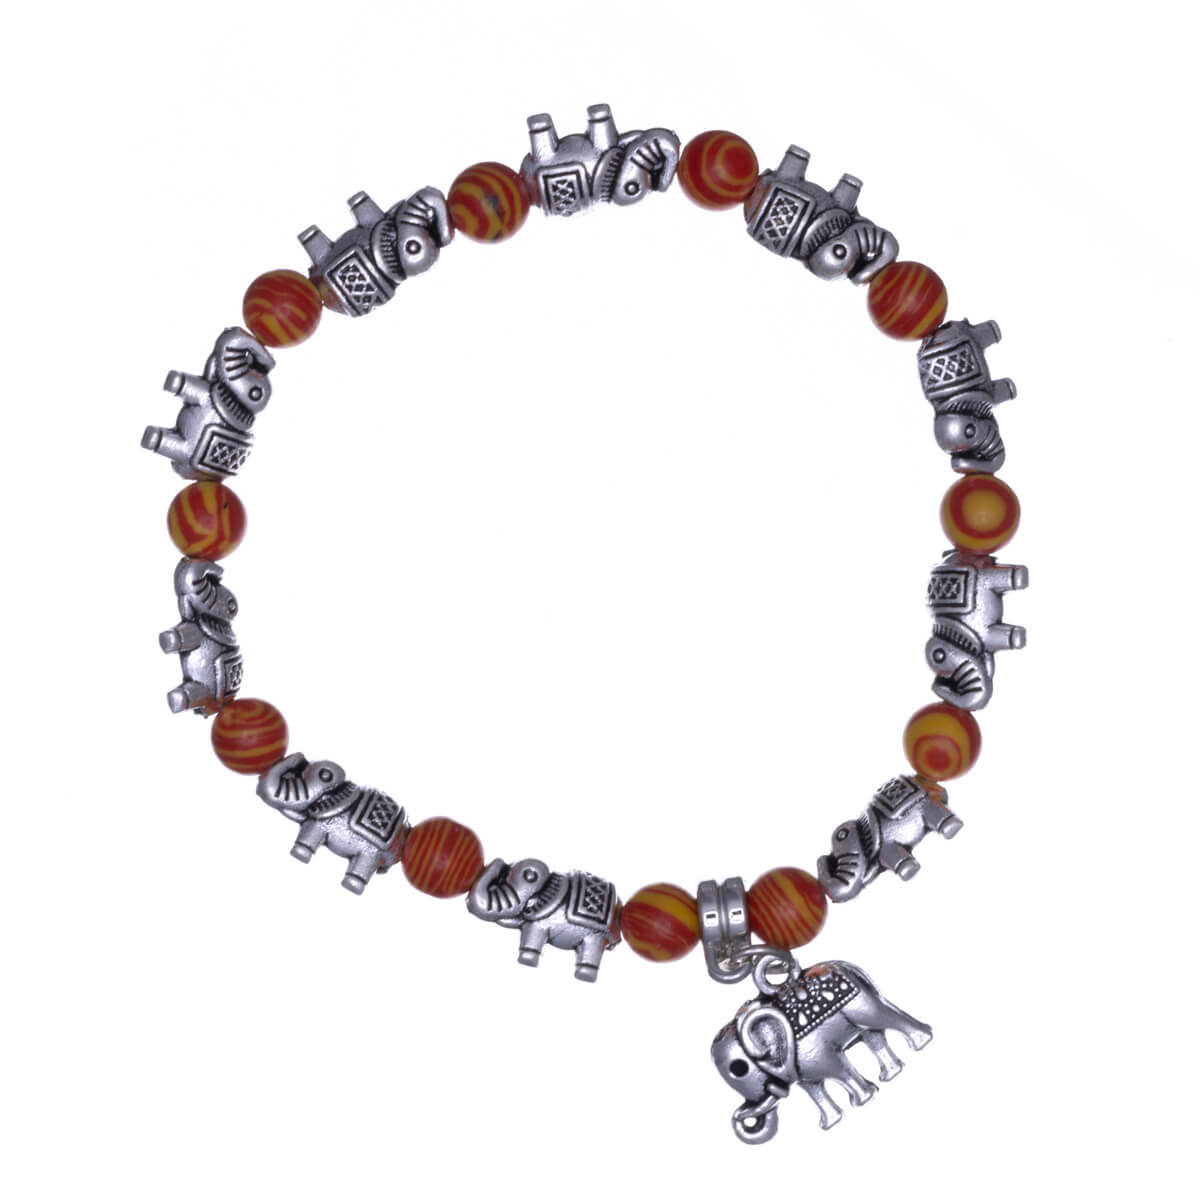 Flexible colourful elephant bracelet with pendant